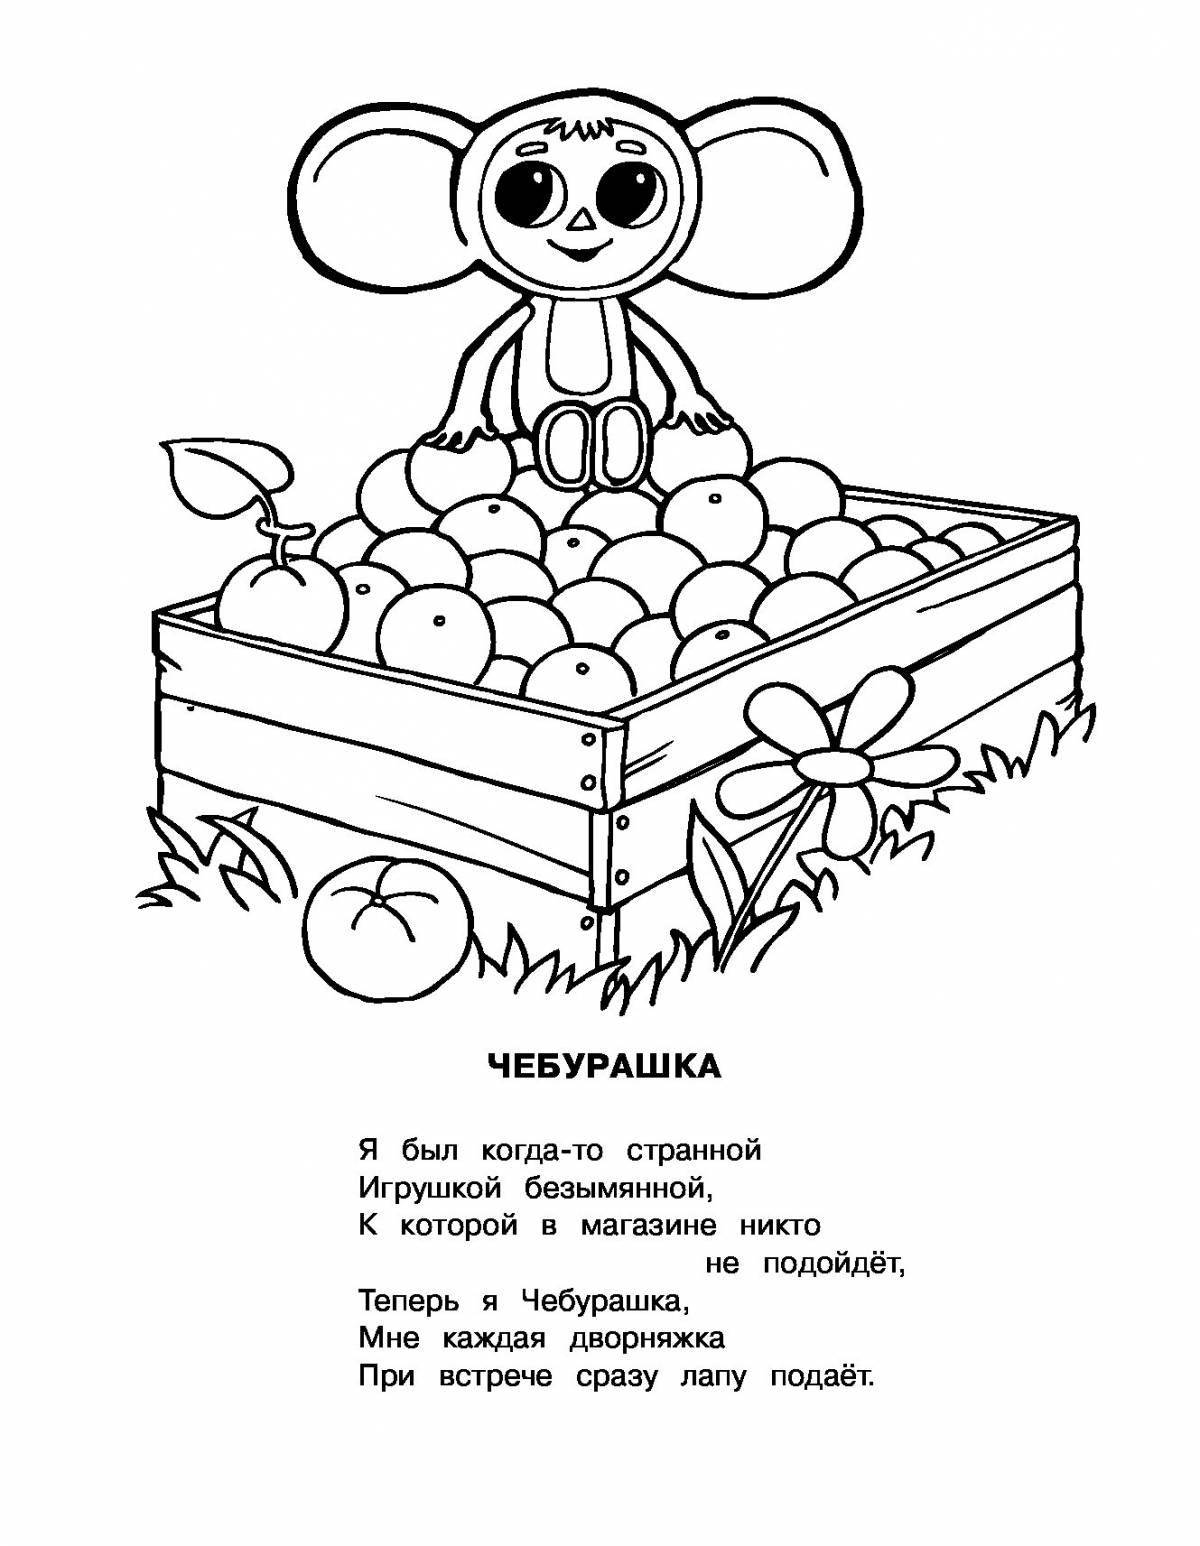 Fun coloring Cheburashka for children 3-4 years old